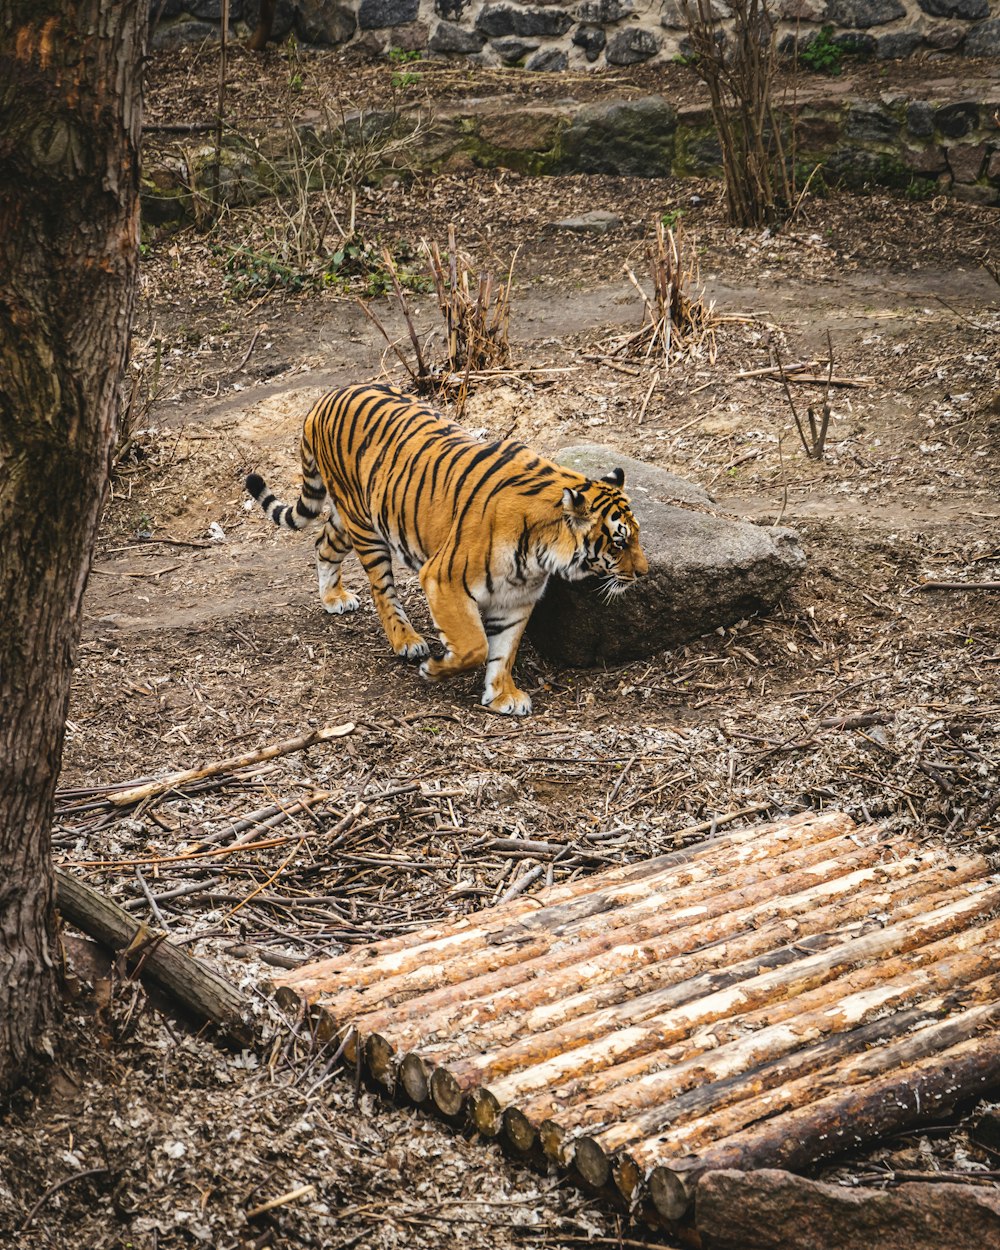 a tiger walking across a dirt field next to a tree